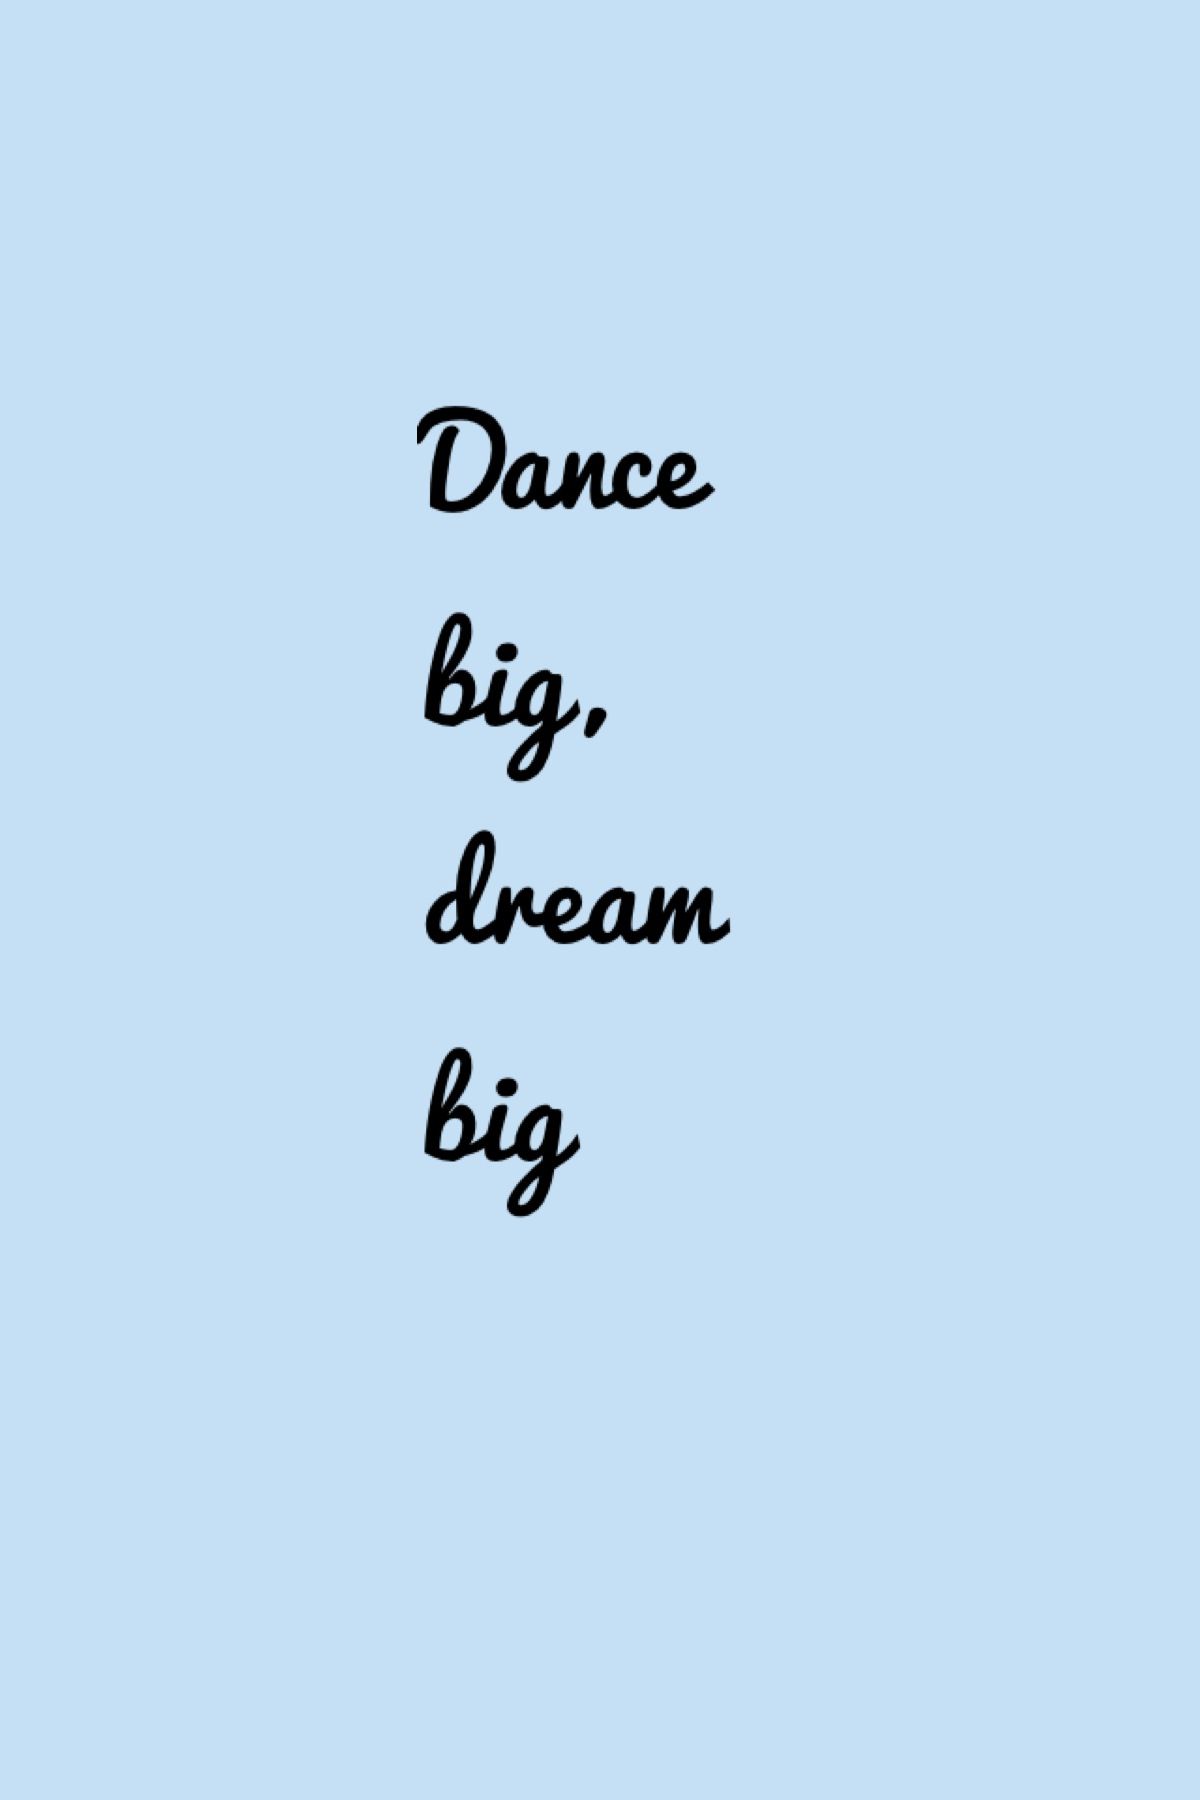 Dance Quotes Wallpaper